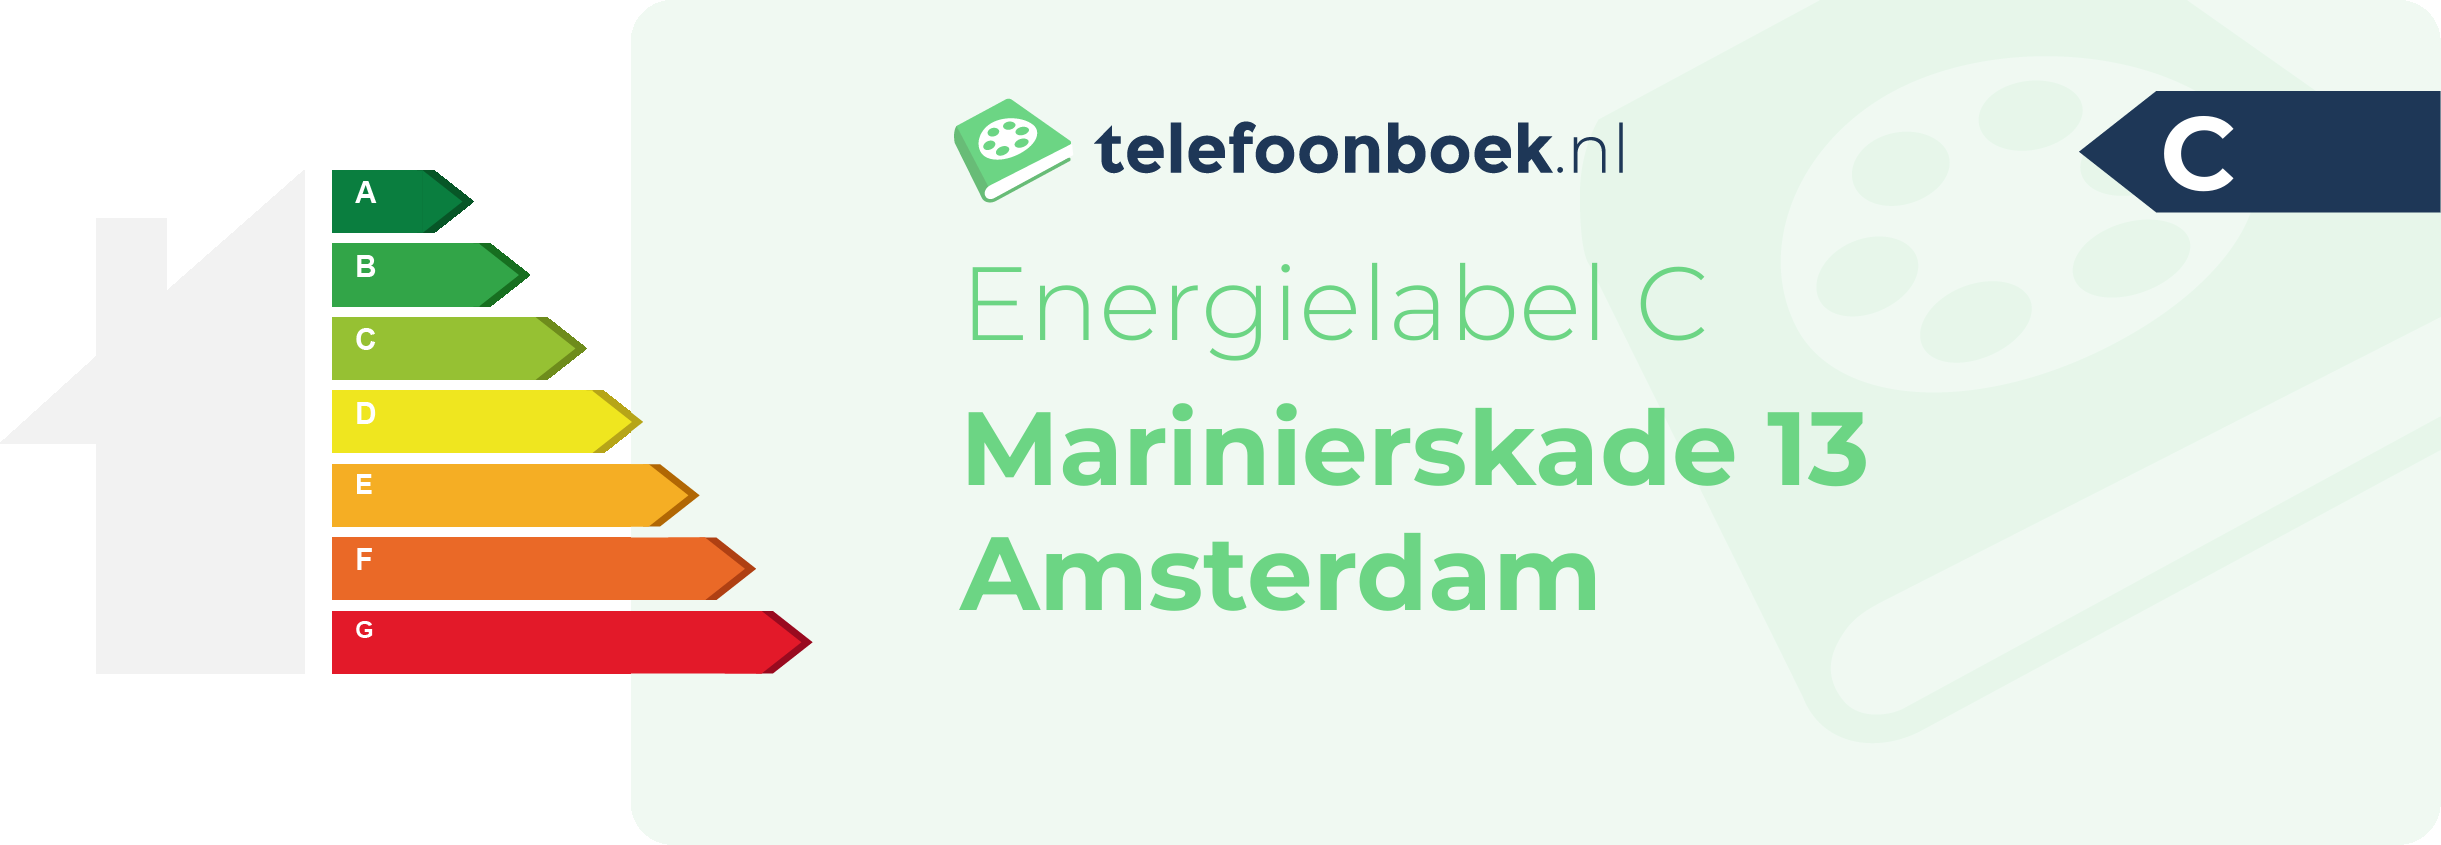 Energielabel Marinierskade 13 Amsterdam